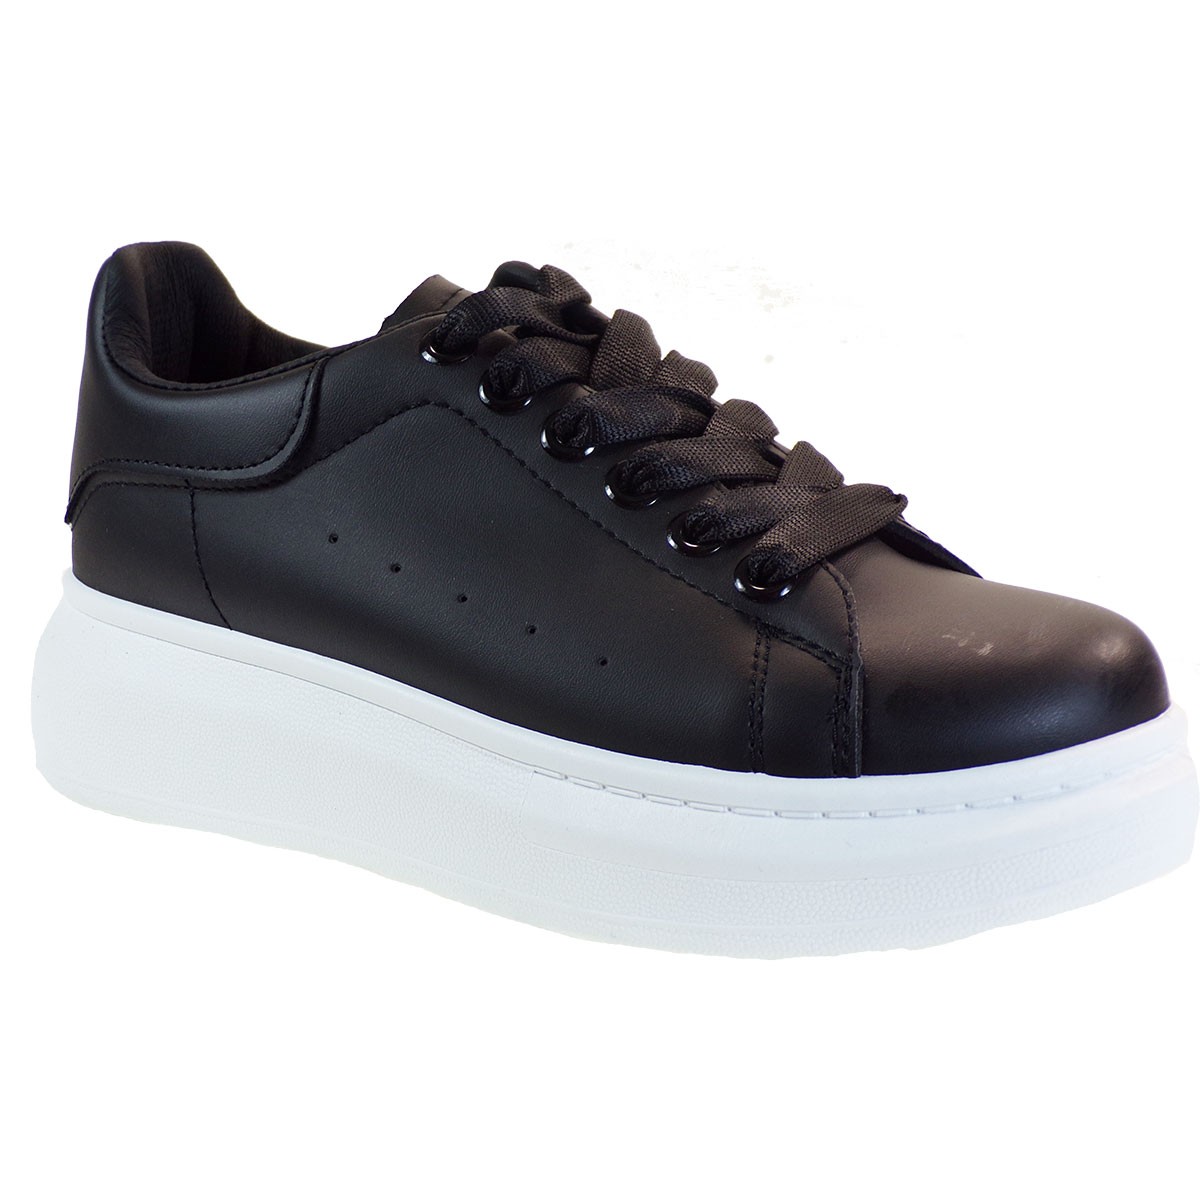 Bagiota Shoes Γυναικεία Παπούτσια Sneakers Αθλητικά C8962 Μαύρο